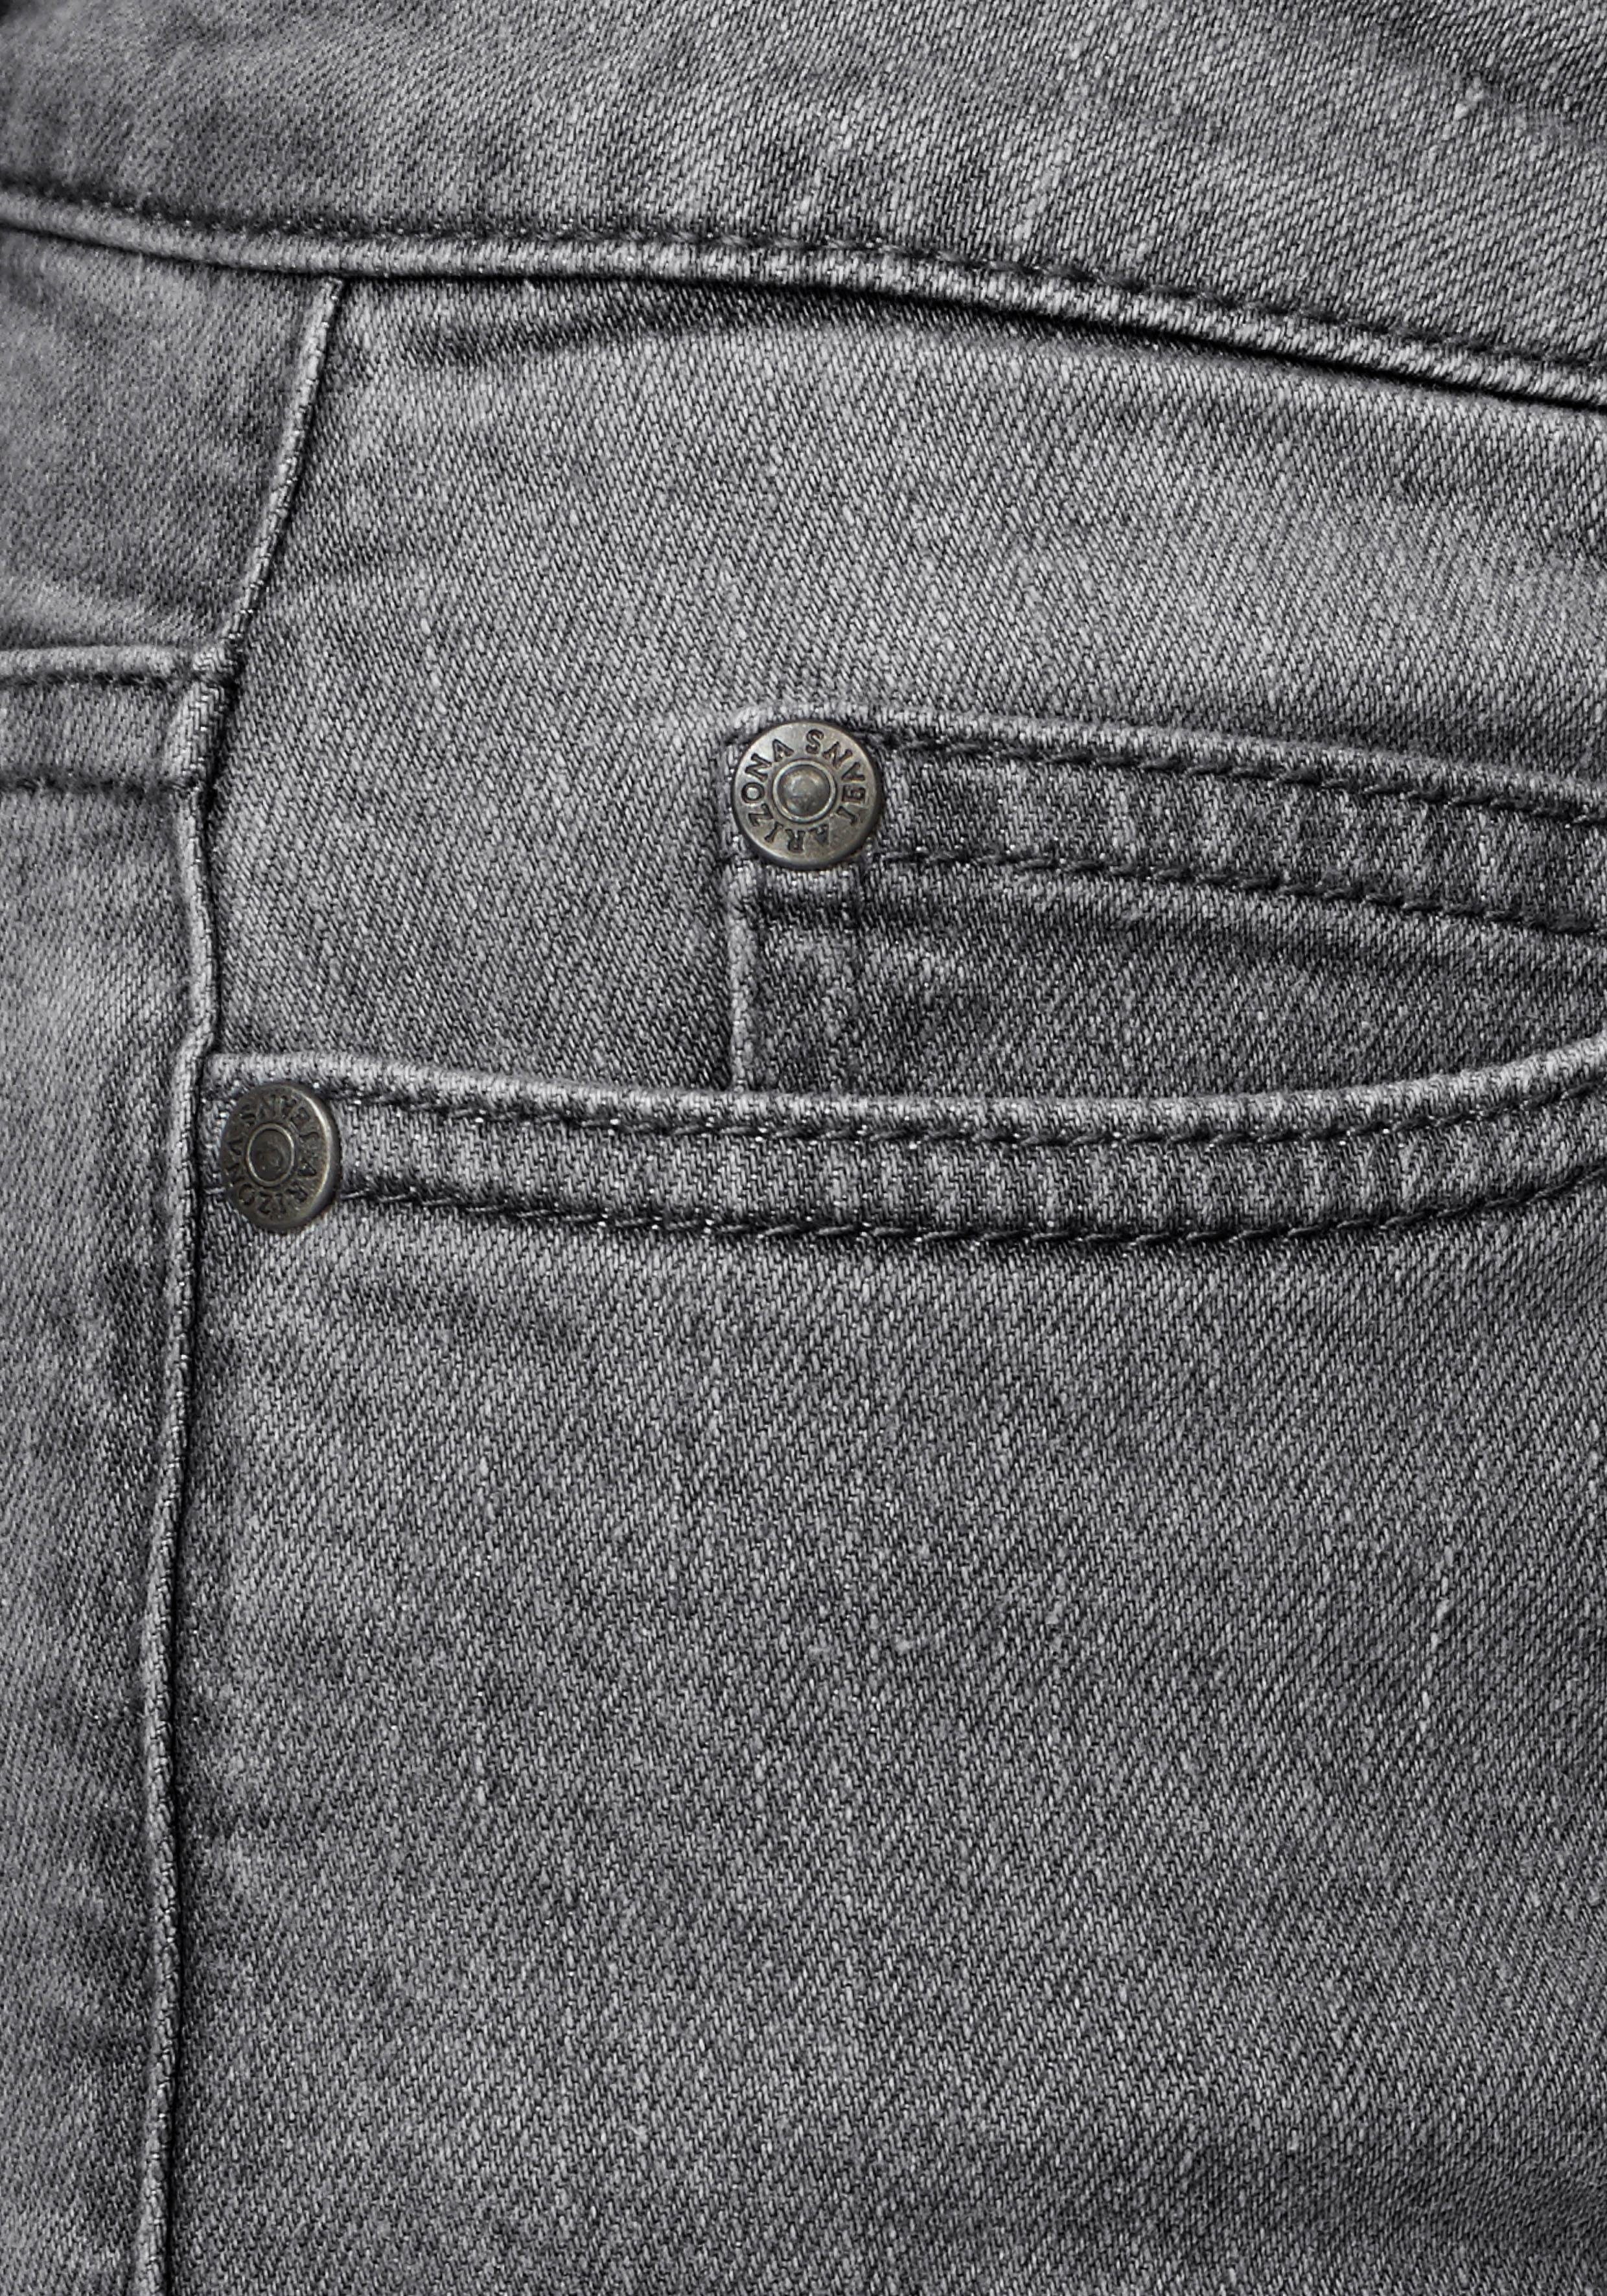 Arizona Bootcut-Jeans Comfort-Fit High Waist grey-used